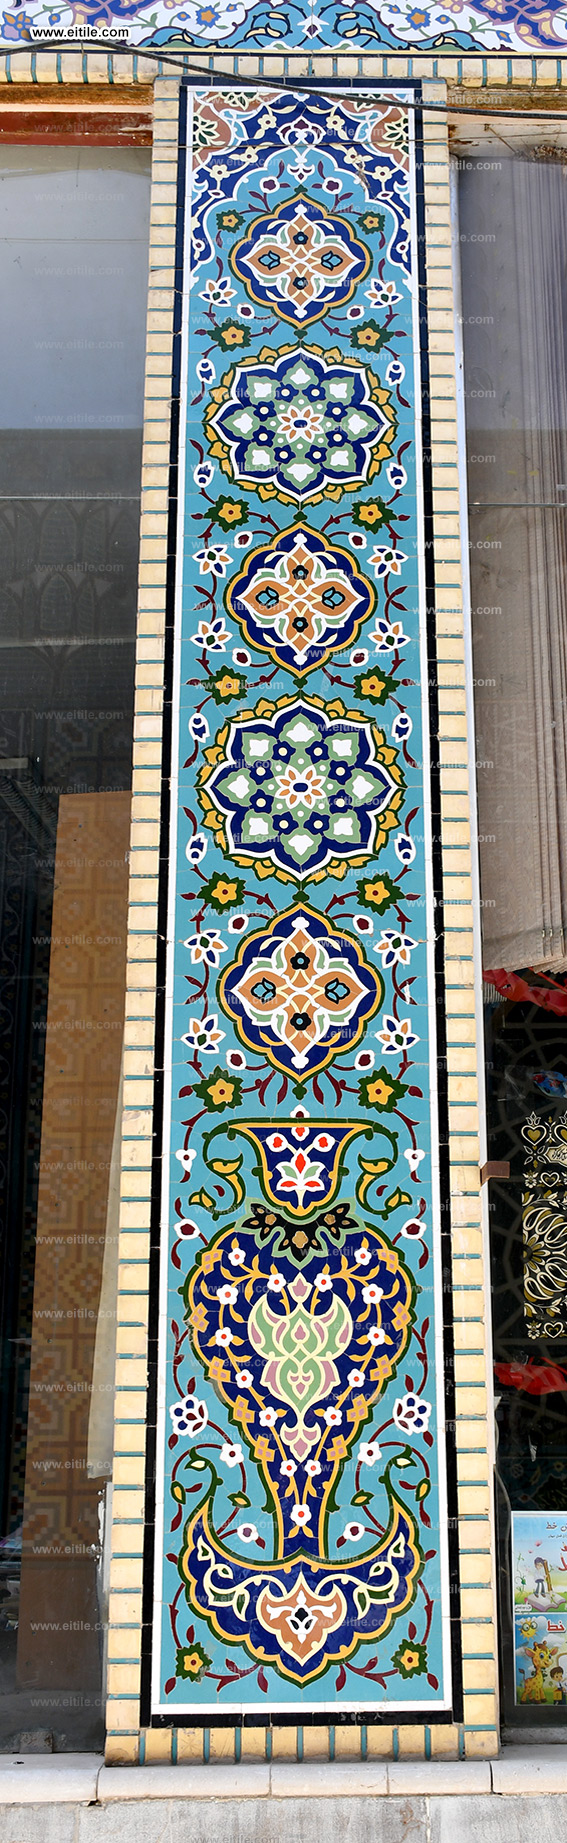 Persian mosque tile supplier, www.eitile.com